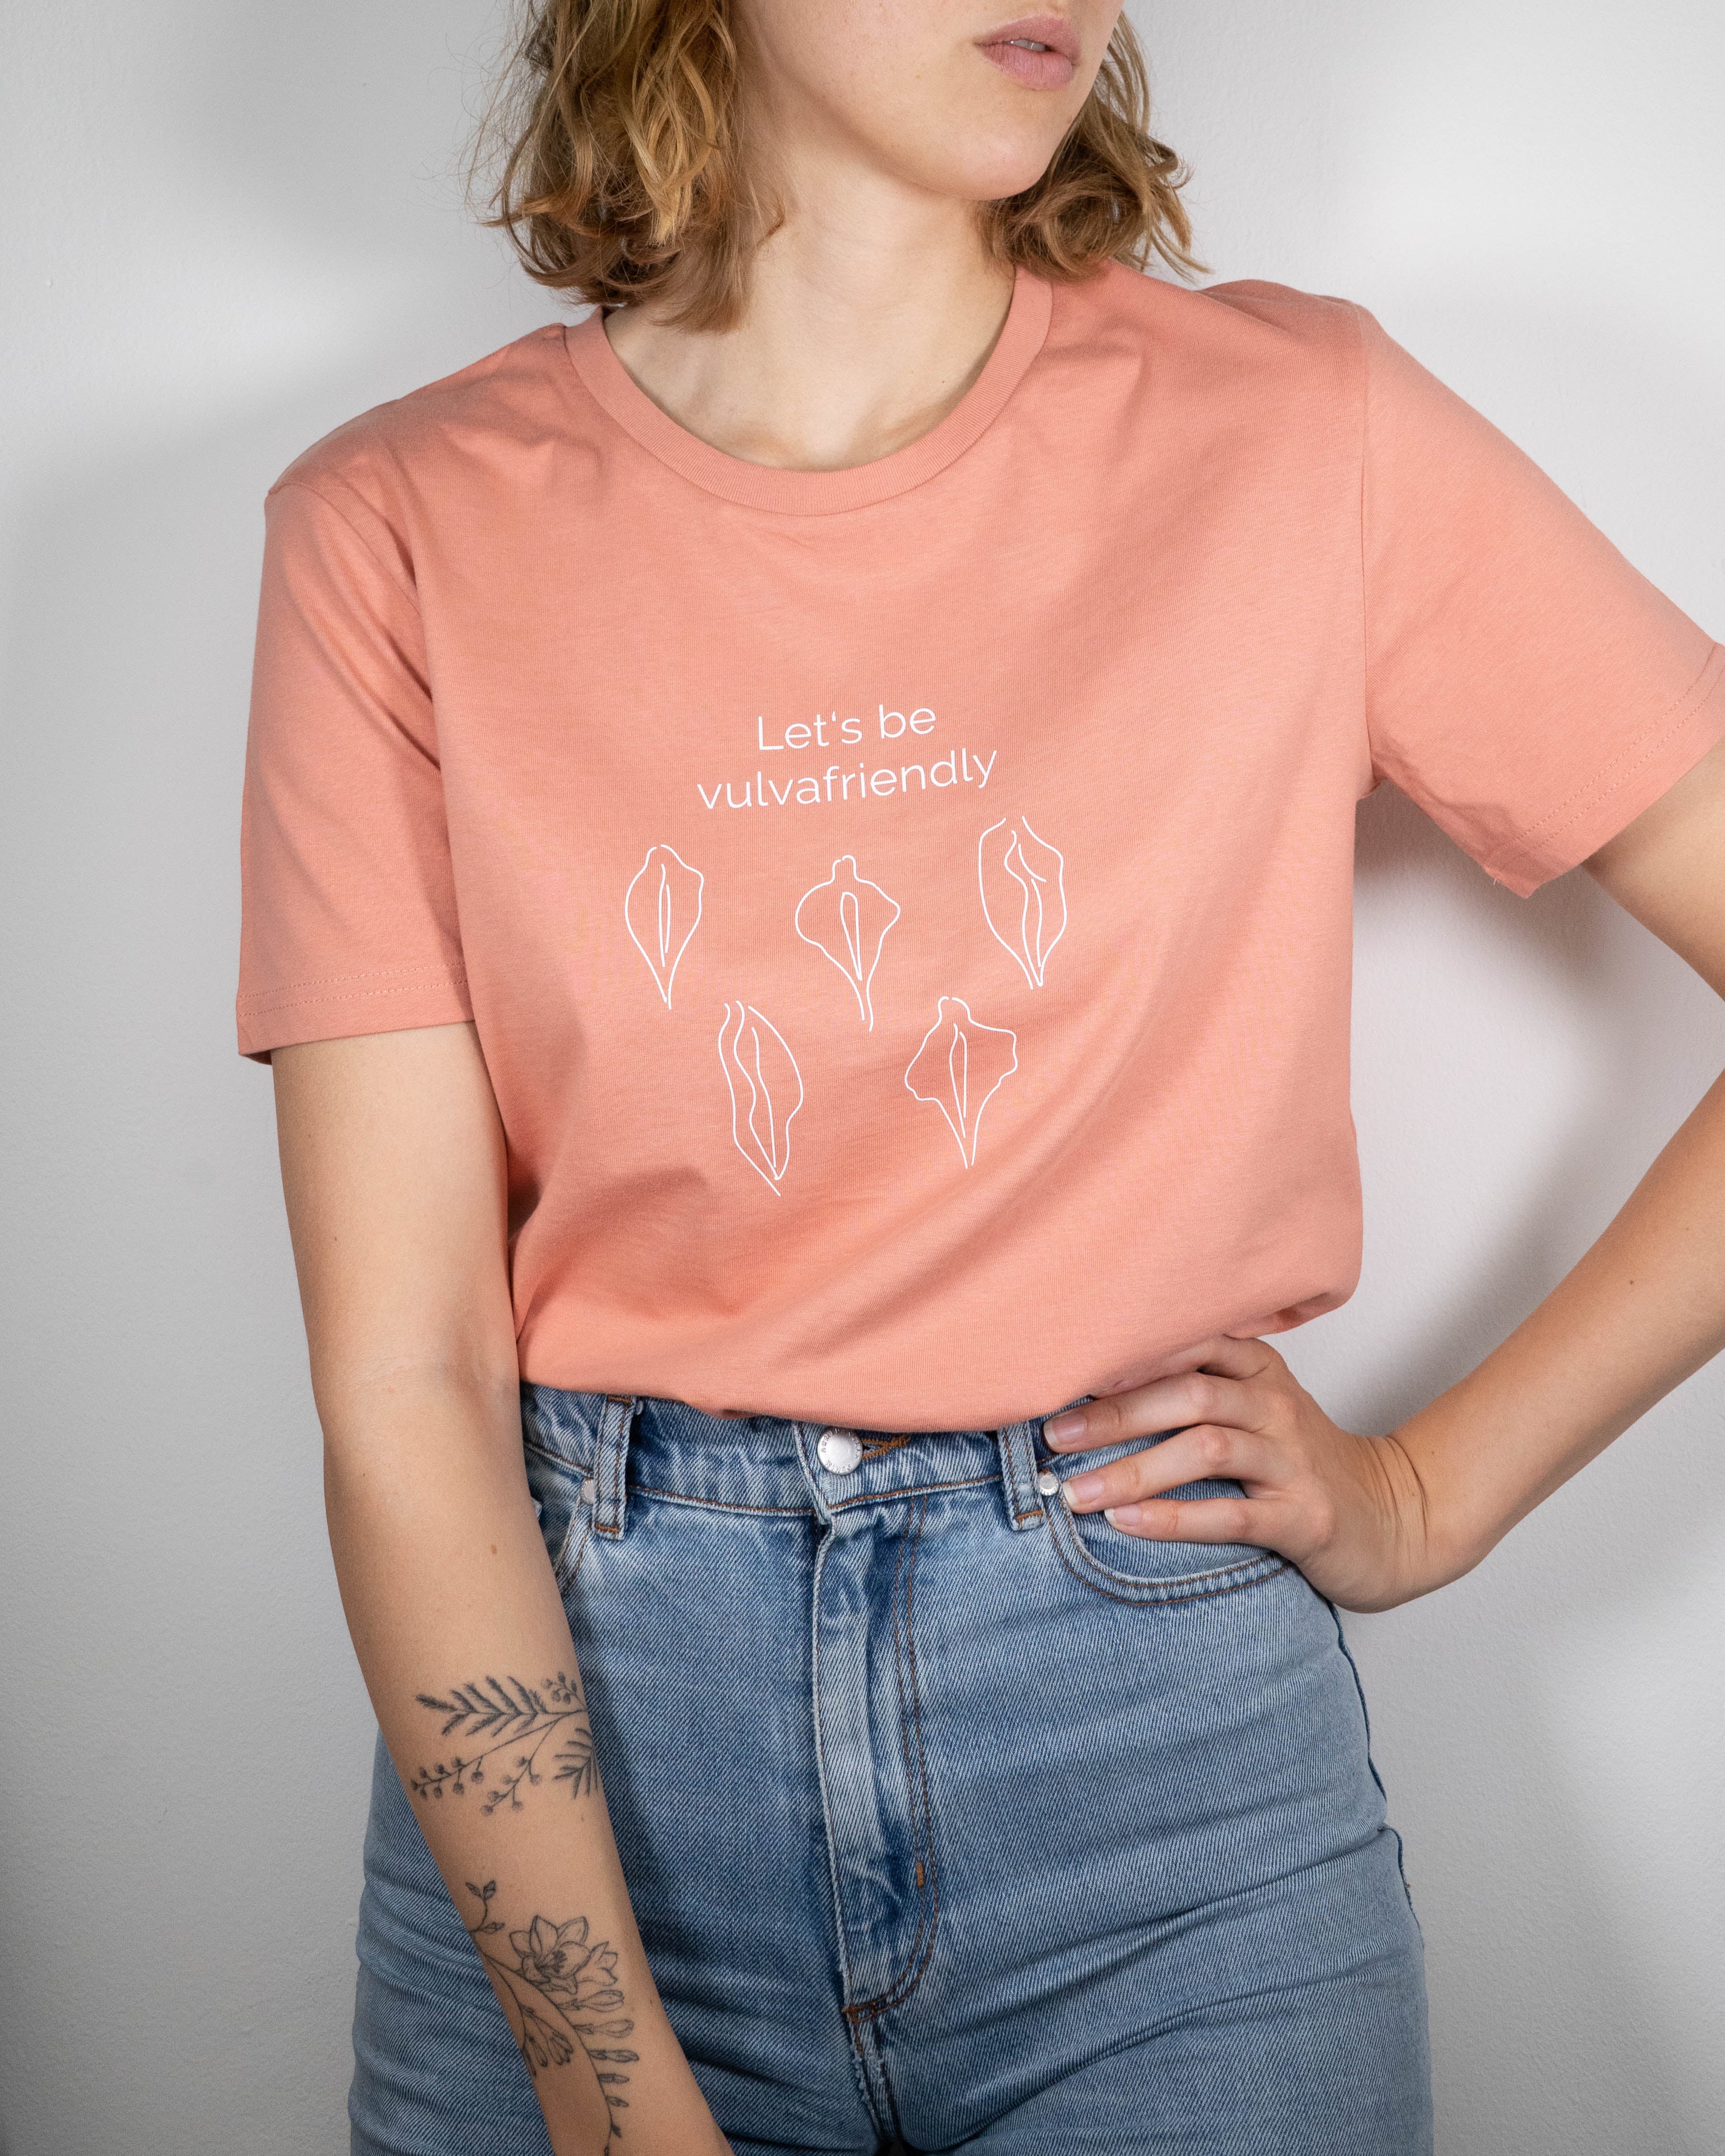 T-Shirt Quinn vulvafriendly unisex